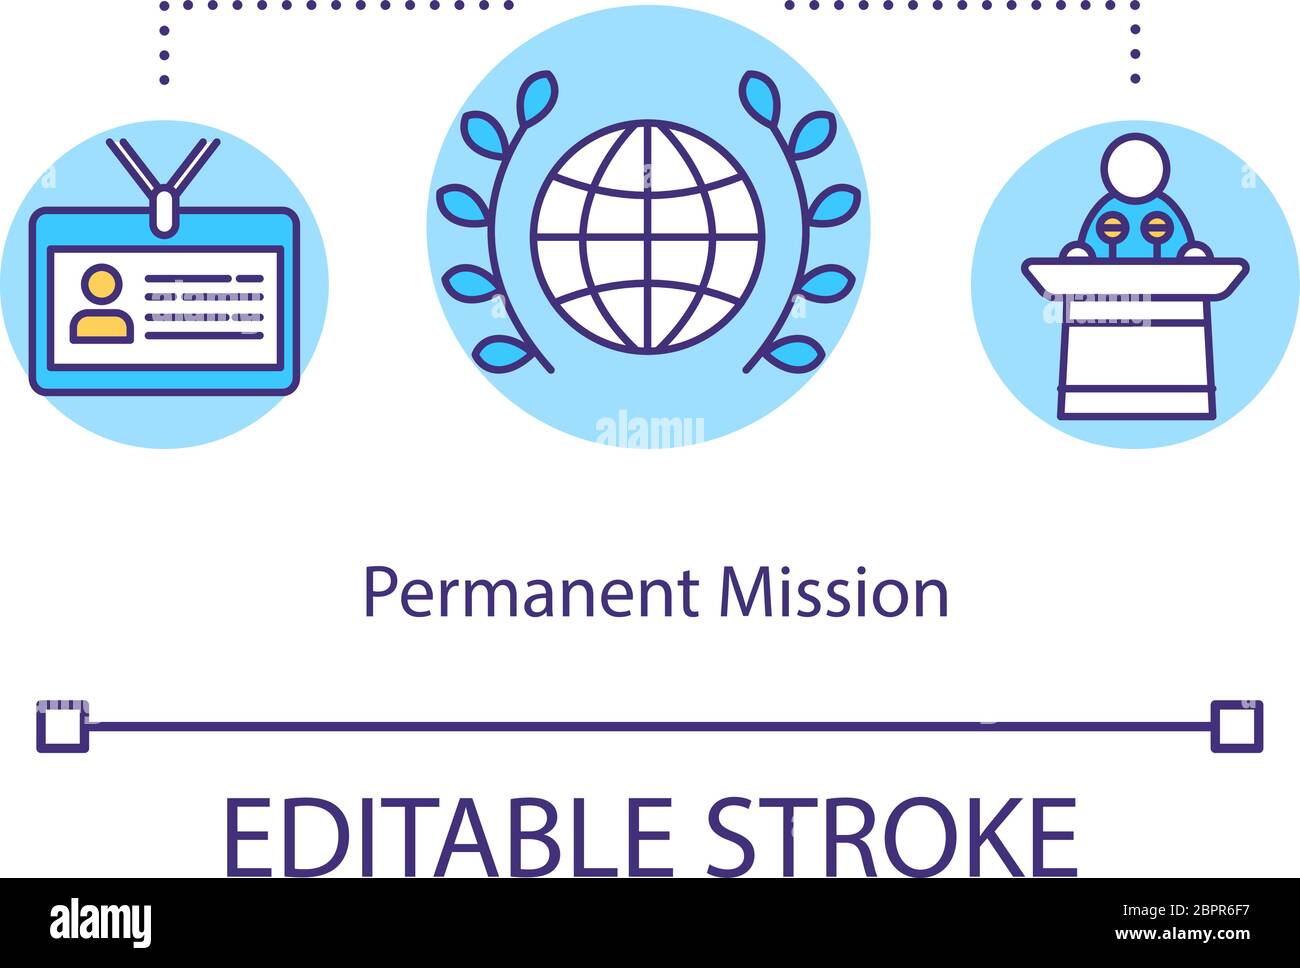 Permanent mission concept icon Stock Vector